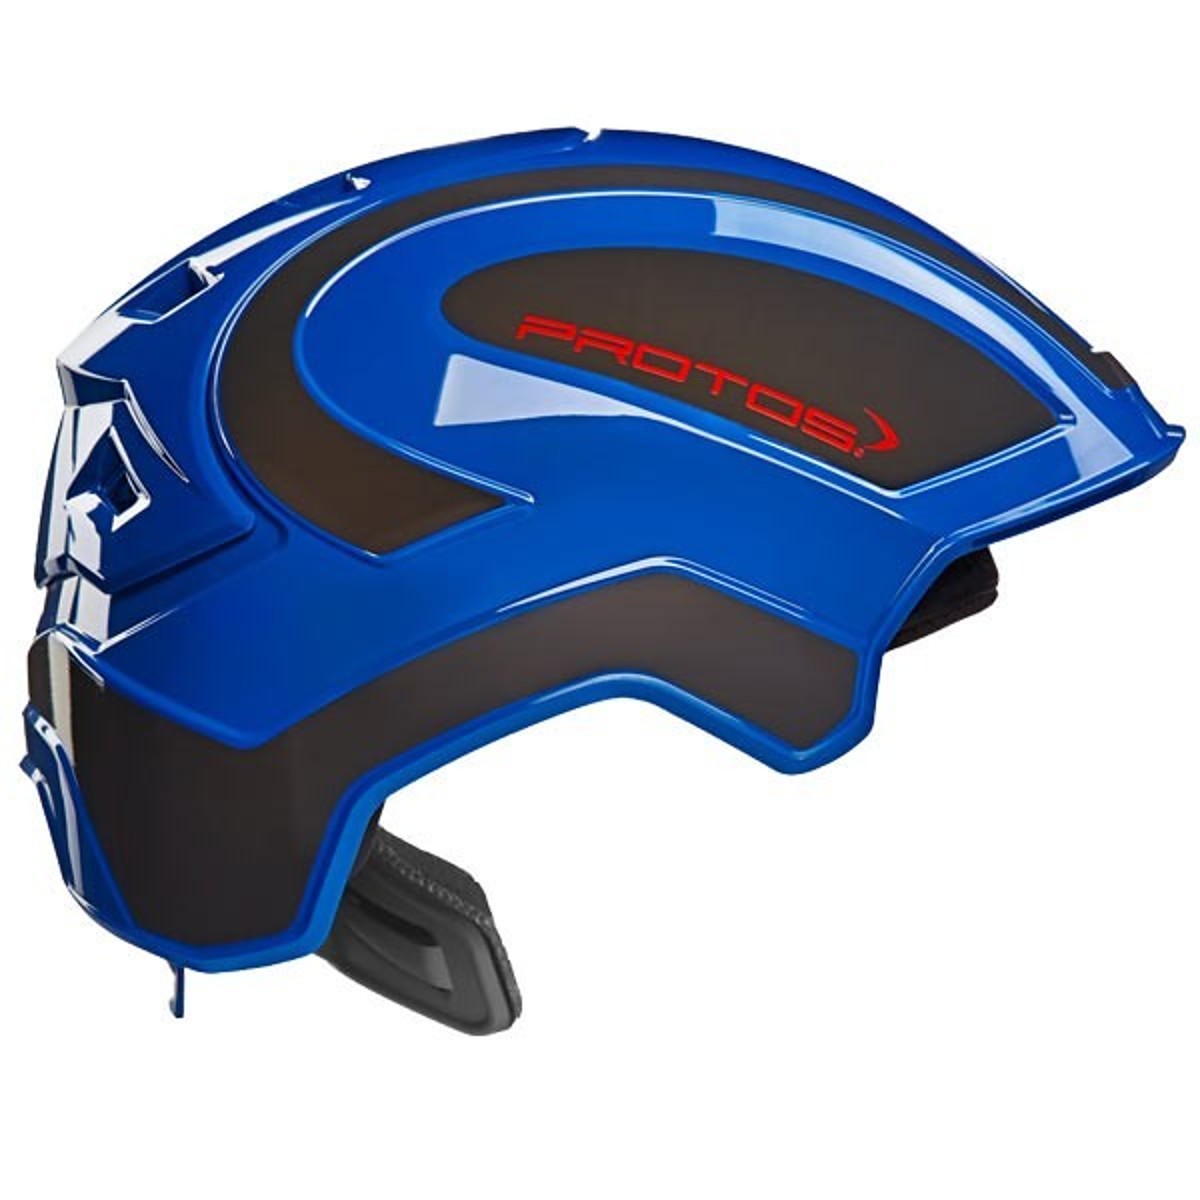 Protos Helm maximaler Schutz - 7